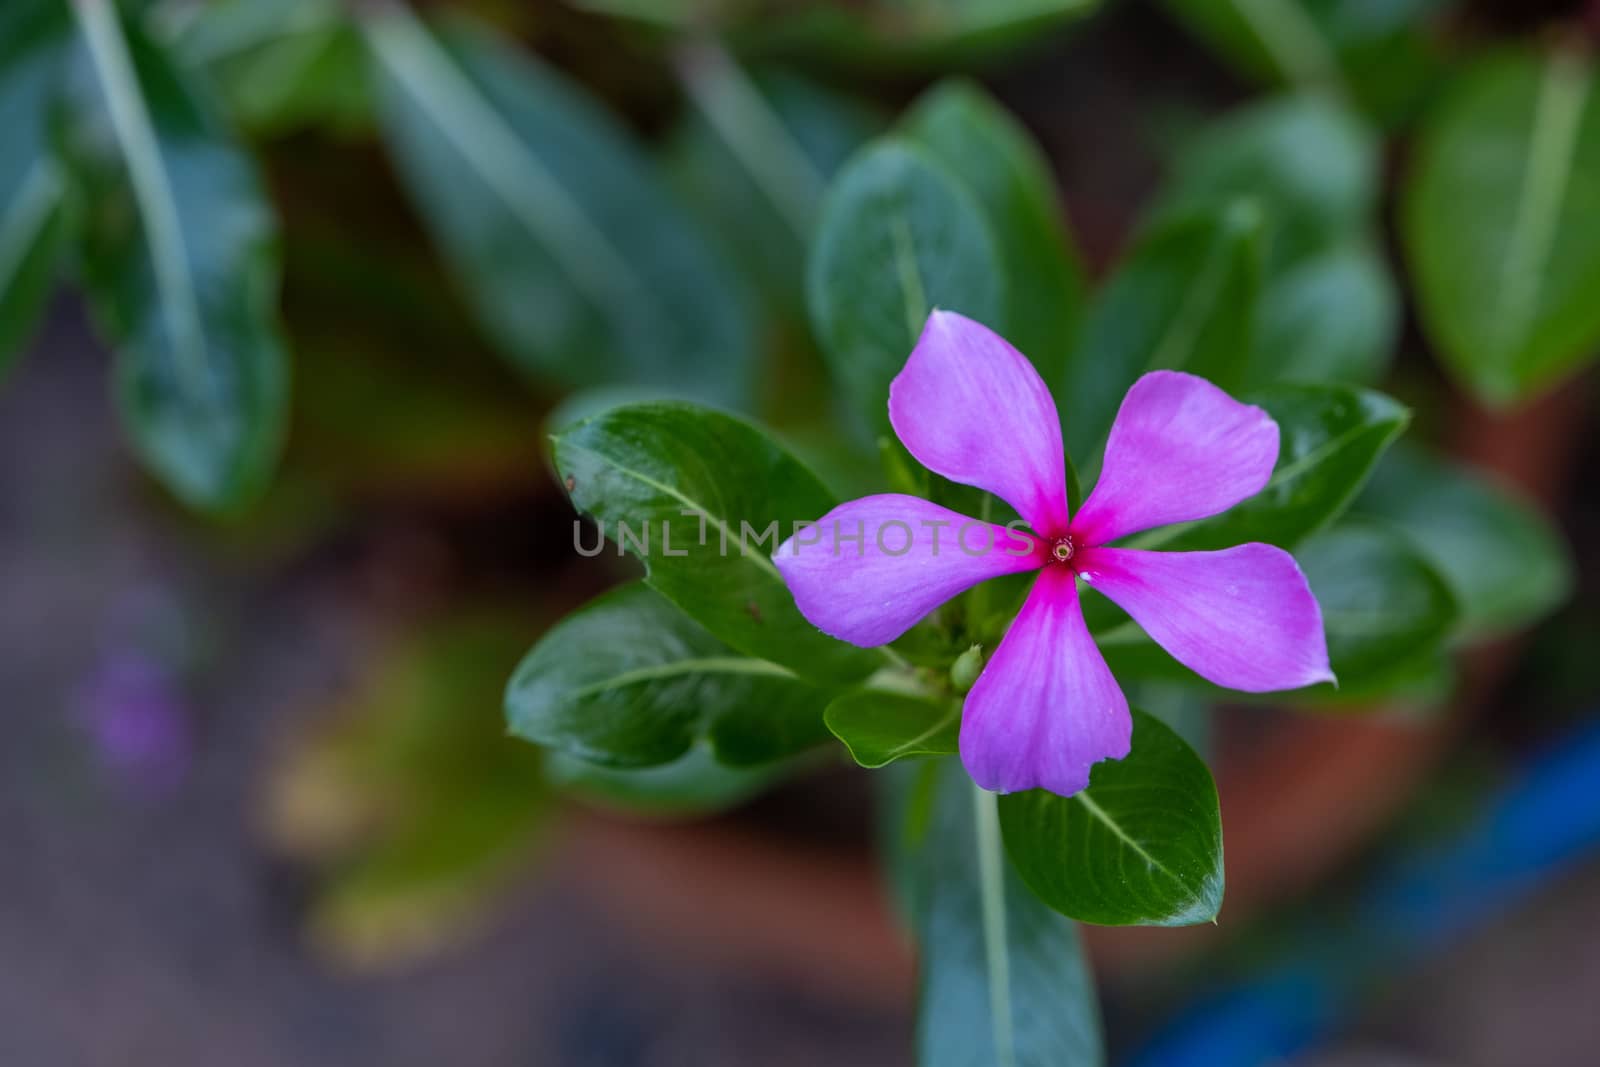 Periwinkle (Vinca minor) a summer flower is a genus of flowering plants in the family Apocynaceae